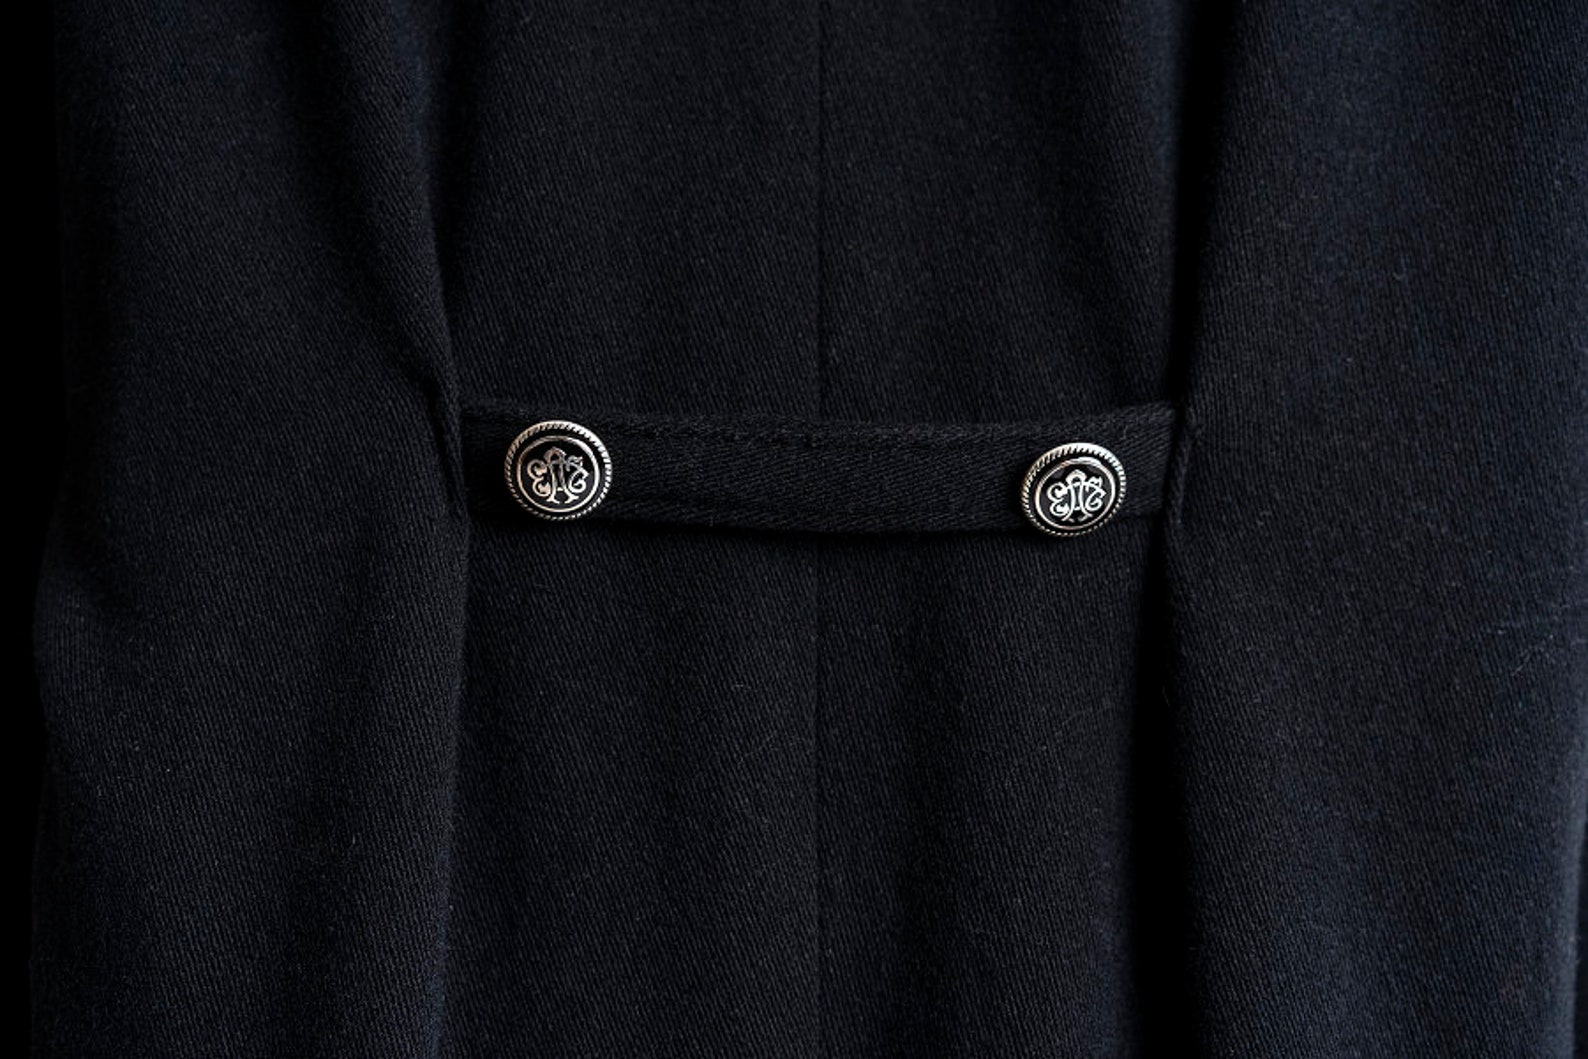 WOLF WEAR Vintage Wedding Steampunk Black Tailcoat Jacket - Etsy